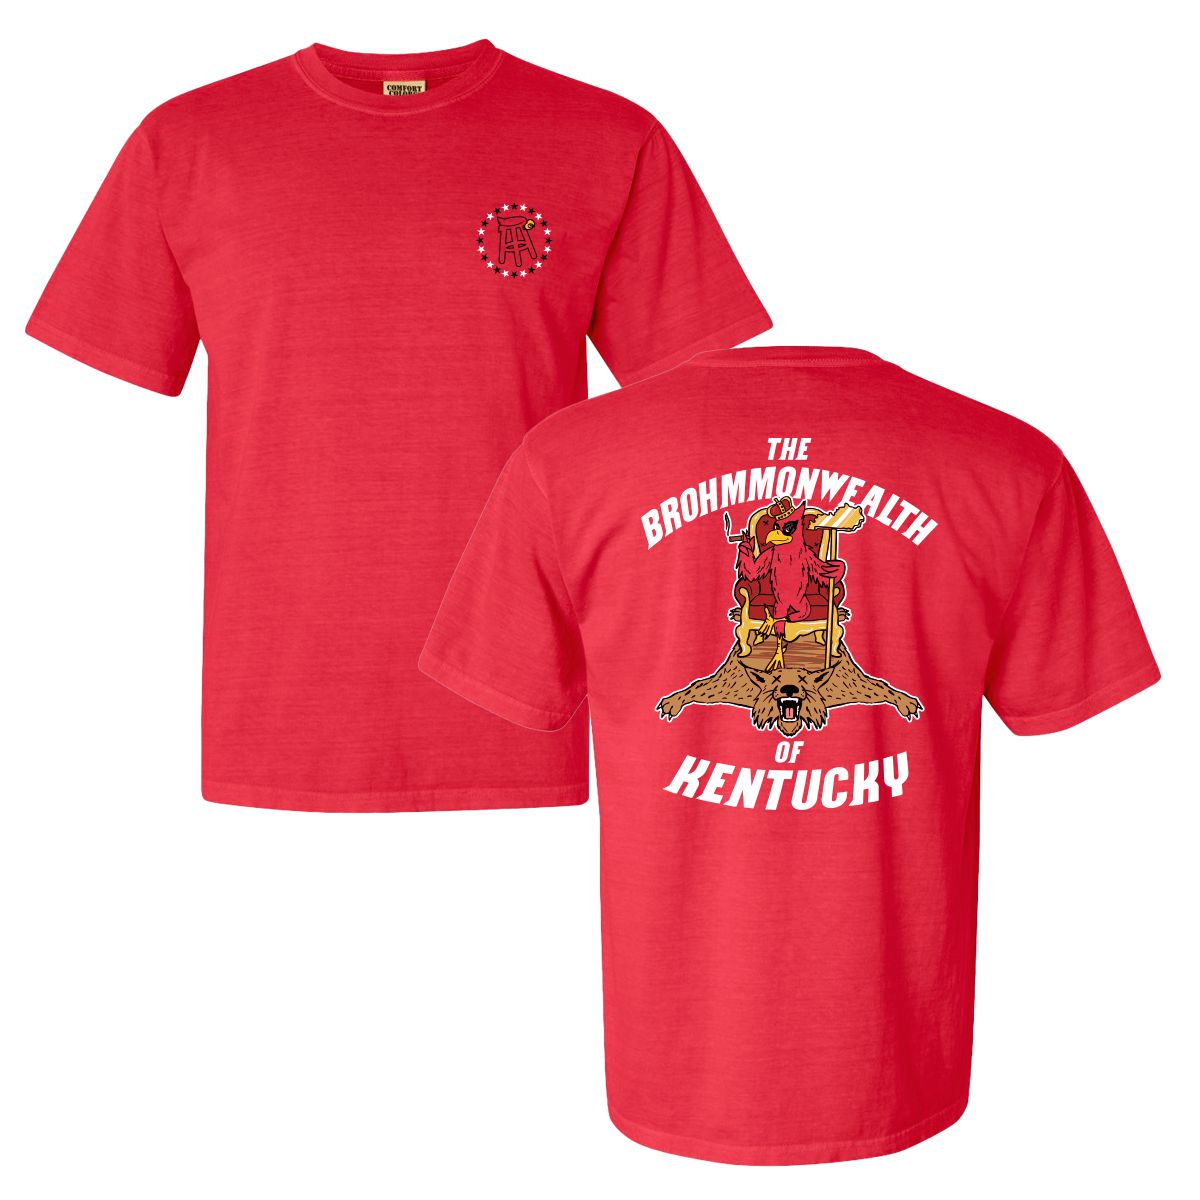 The B of Kentucky Tee - Barstool U T-Shirts & Merch – Barstool Sports